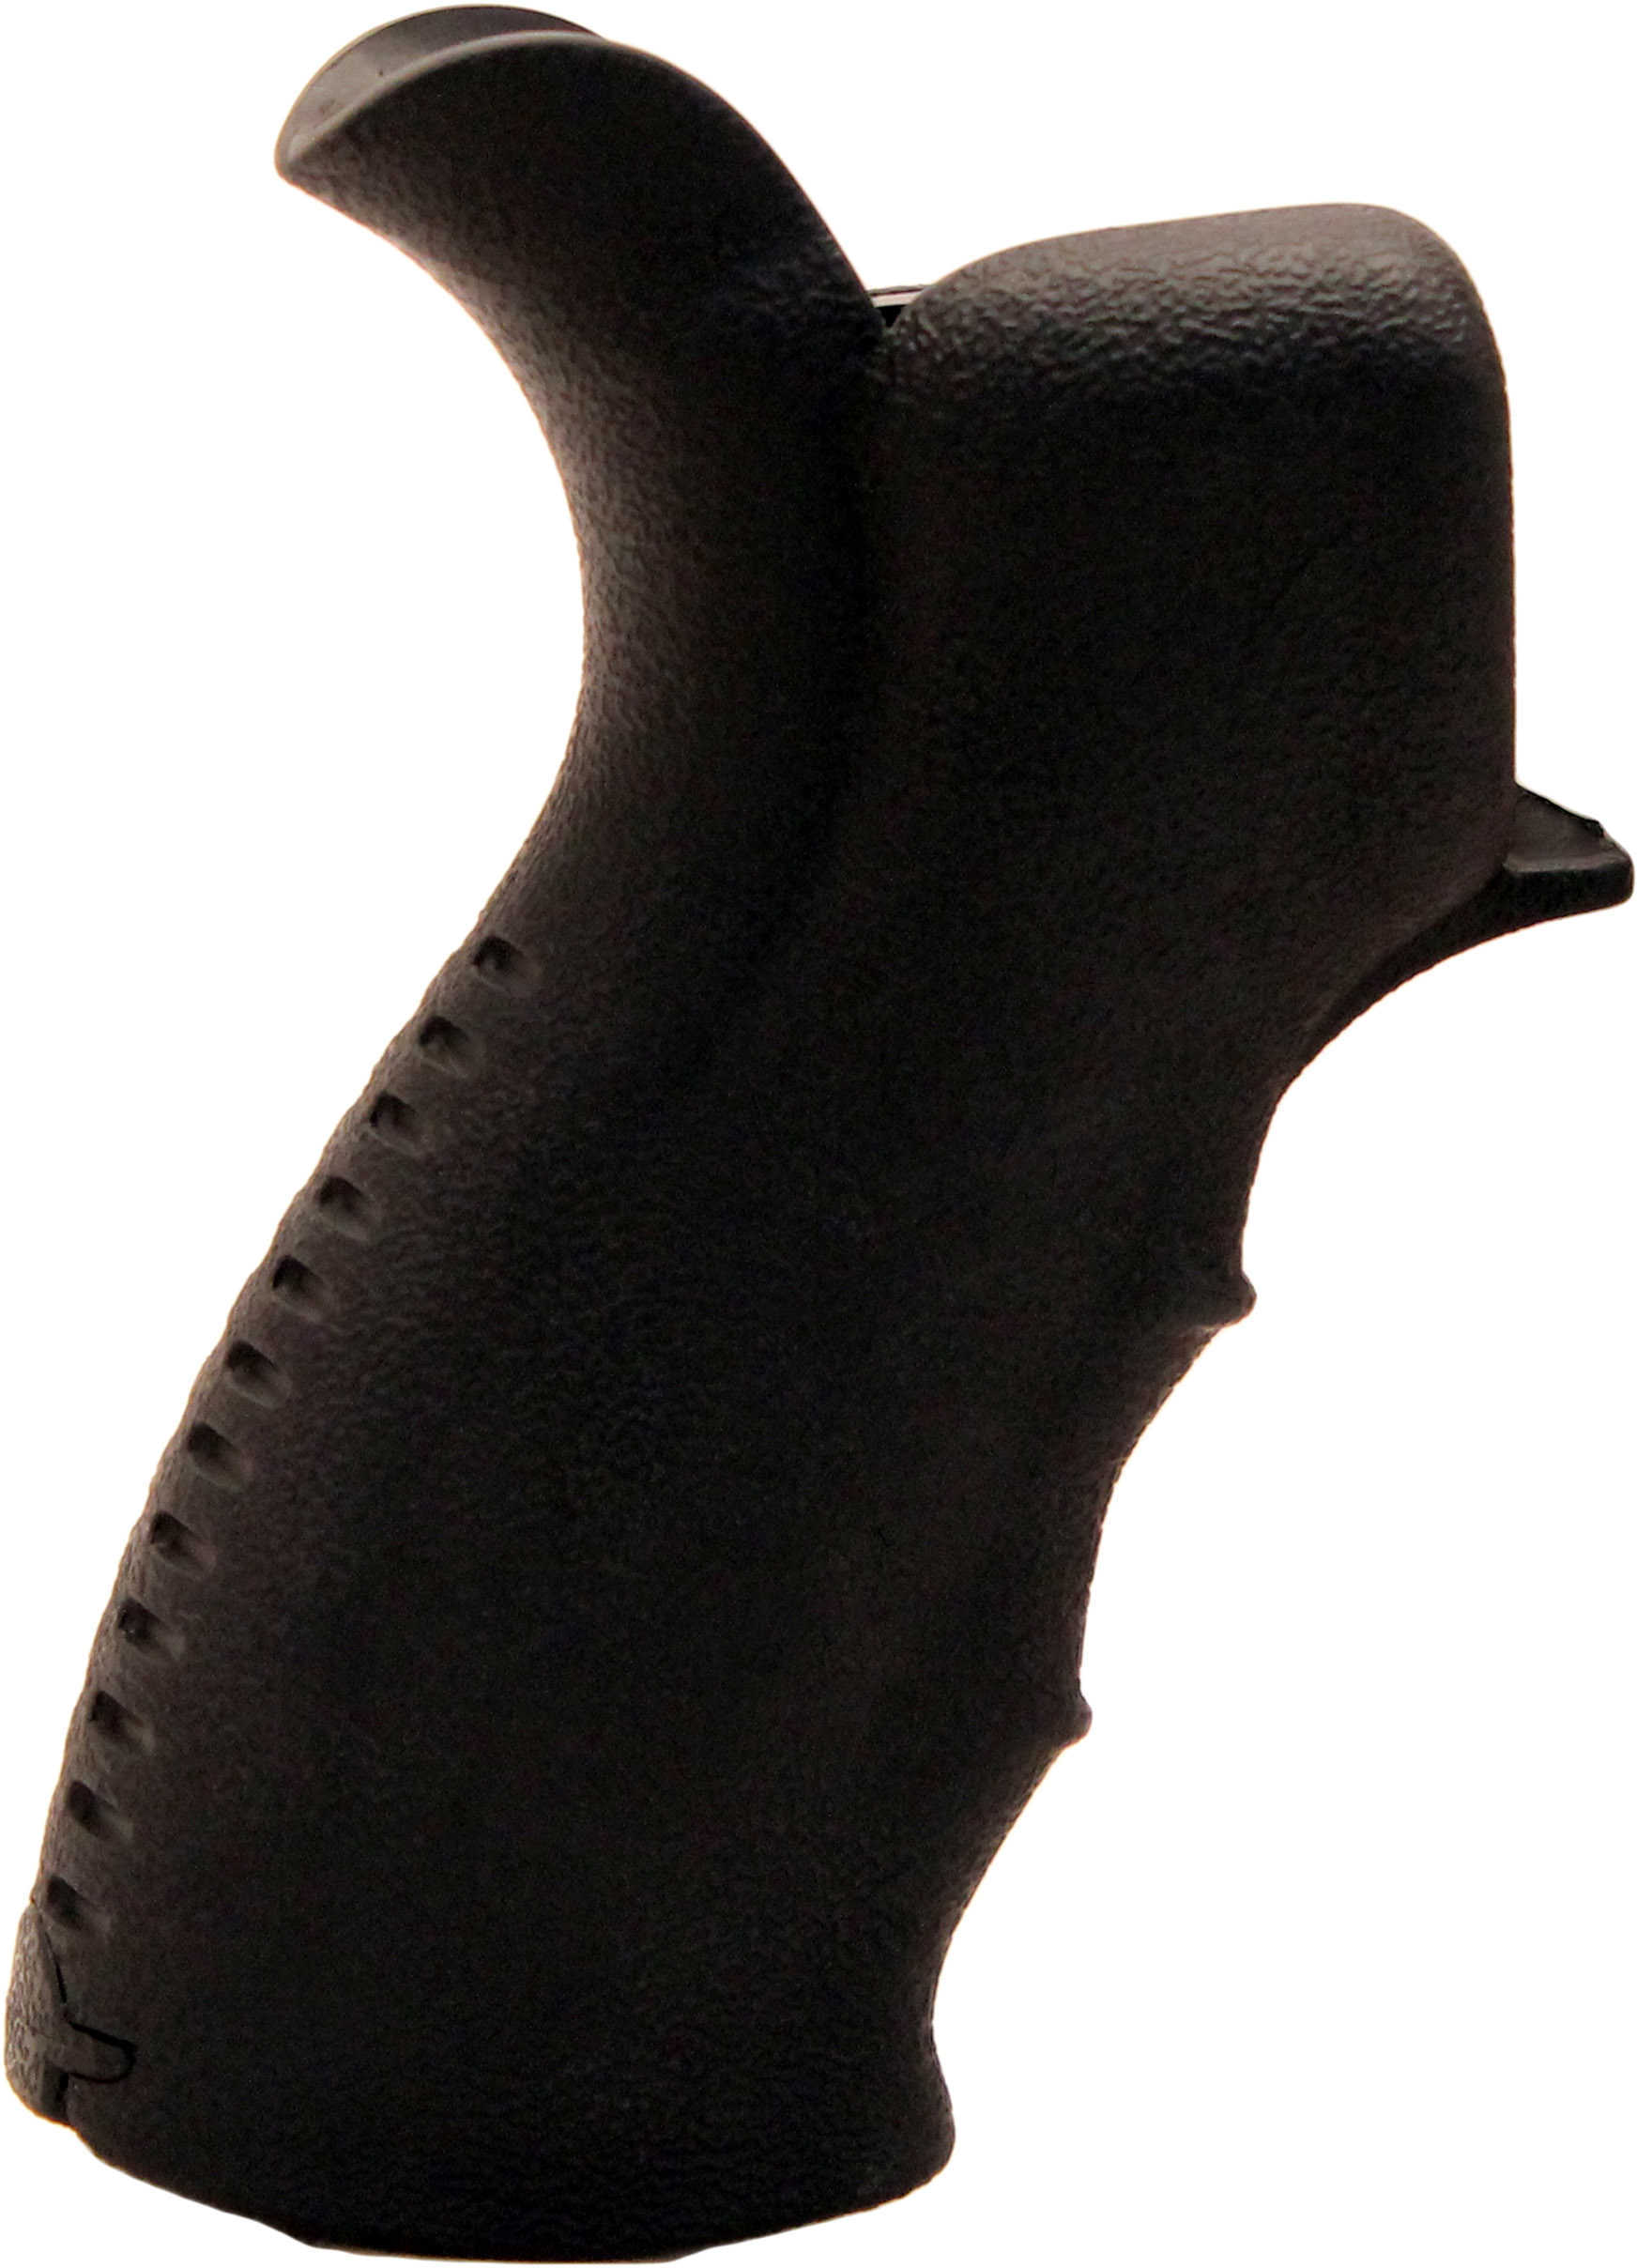 Leapers AR-15 Ergonomic Polymer Grip, Black Md: RBTPG269B